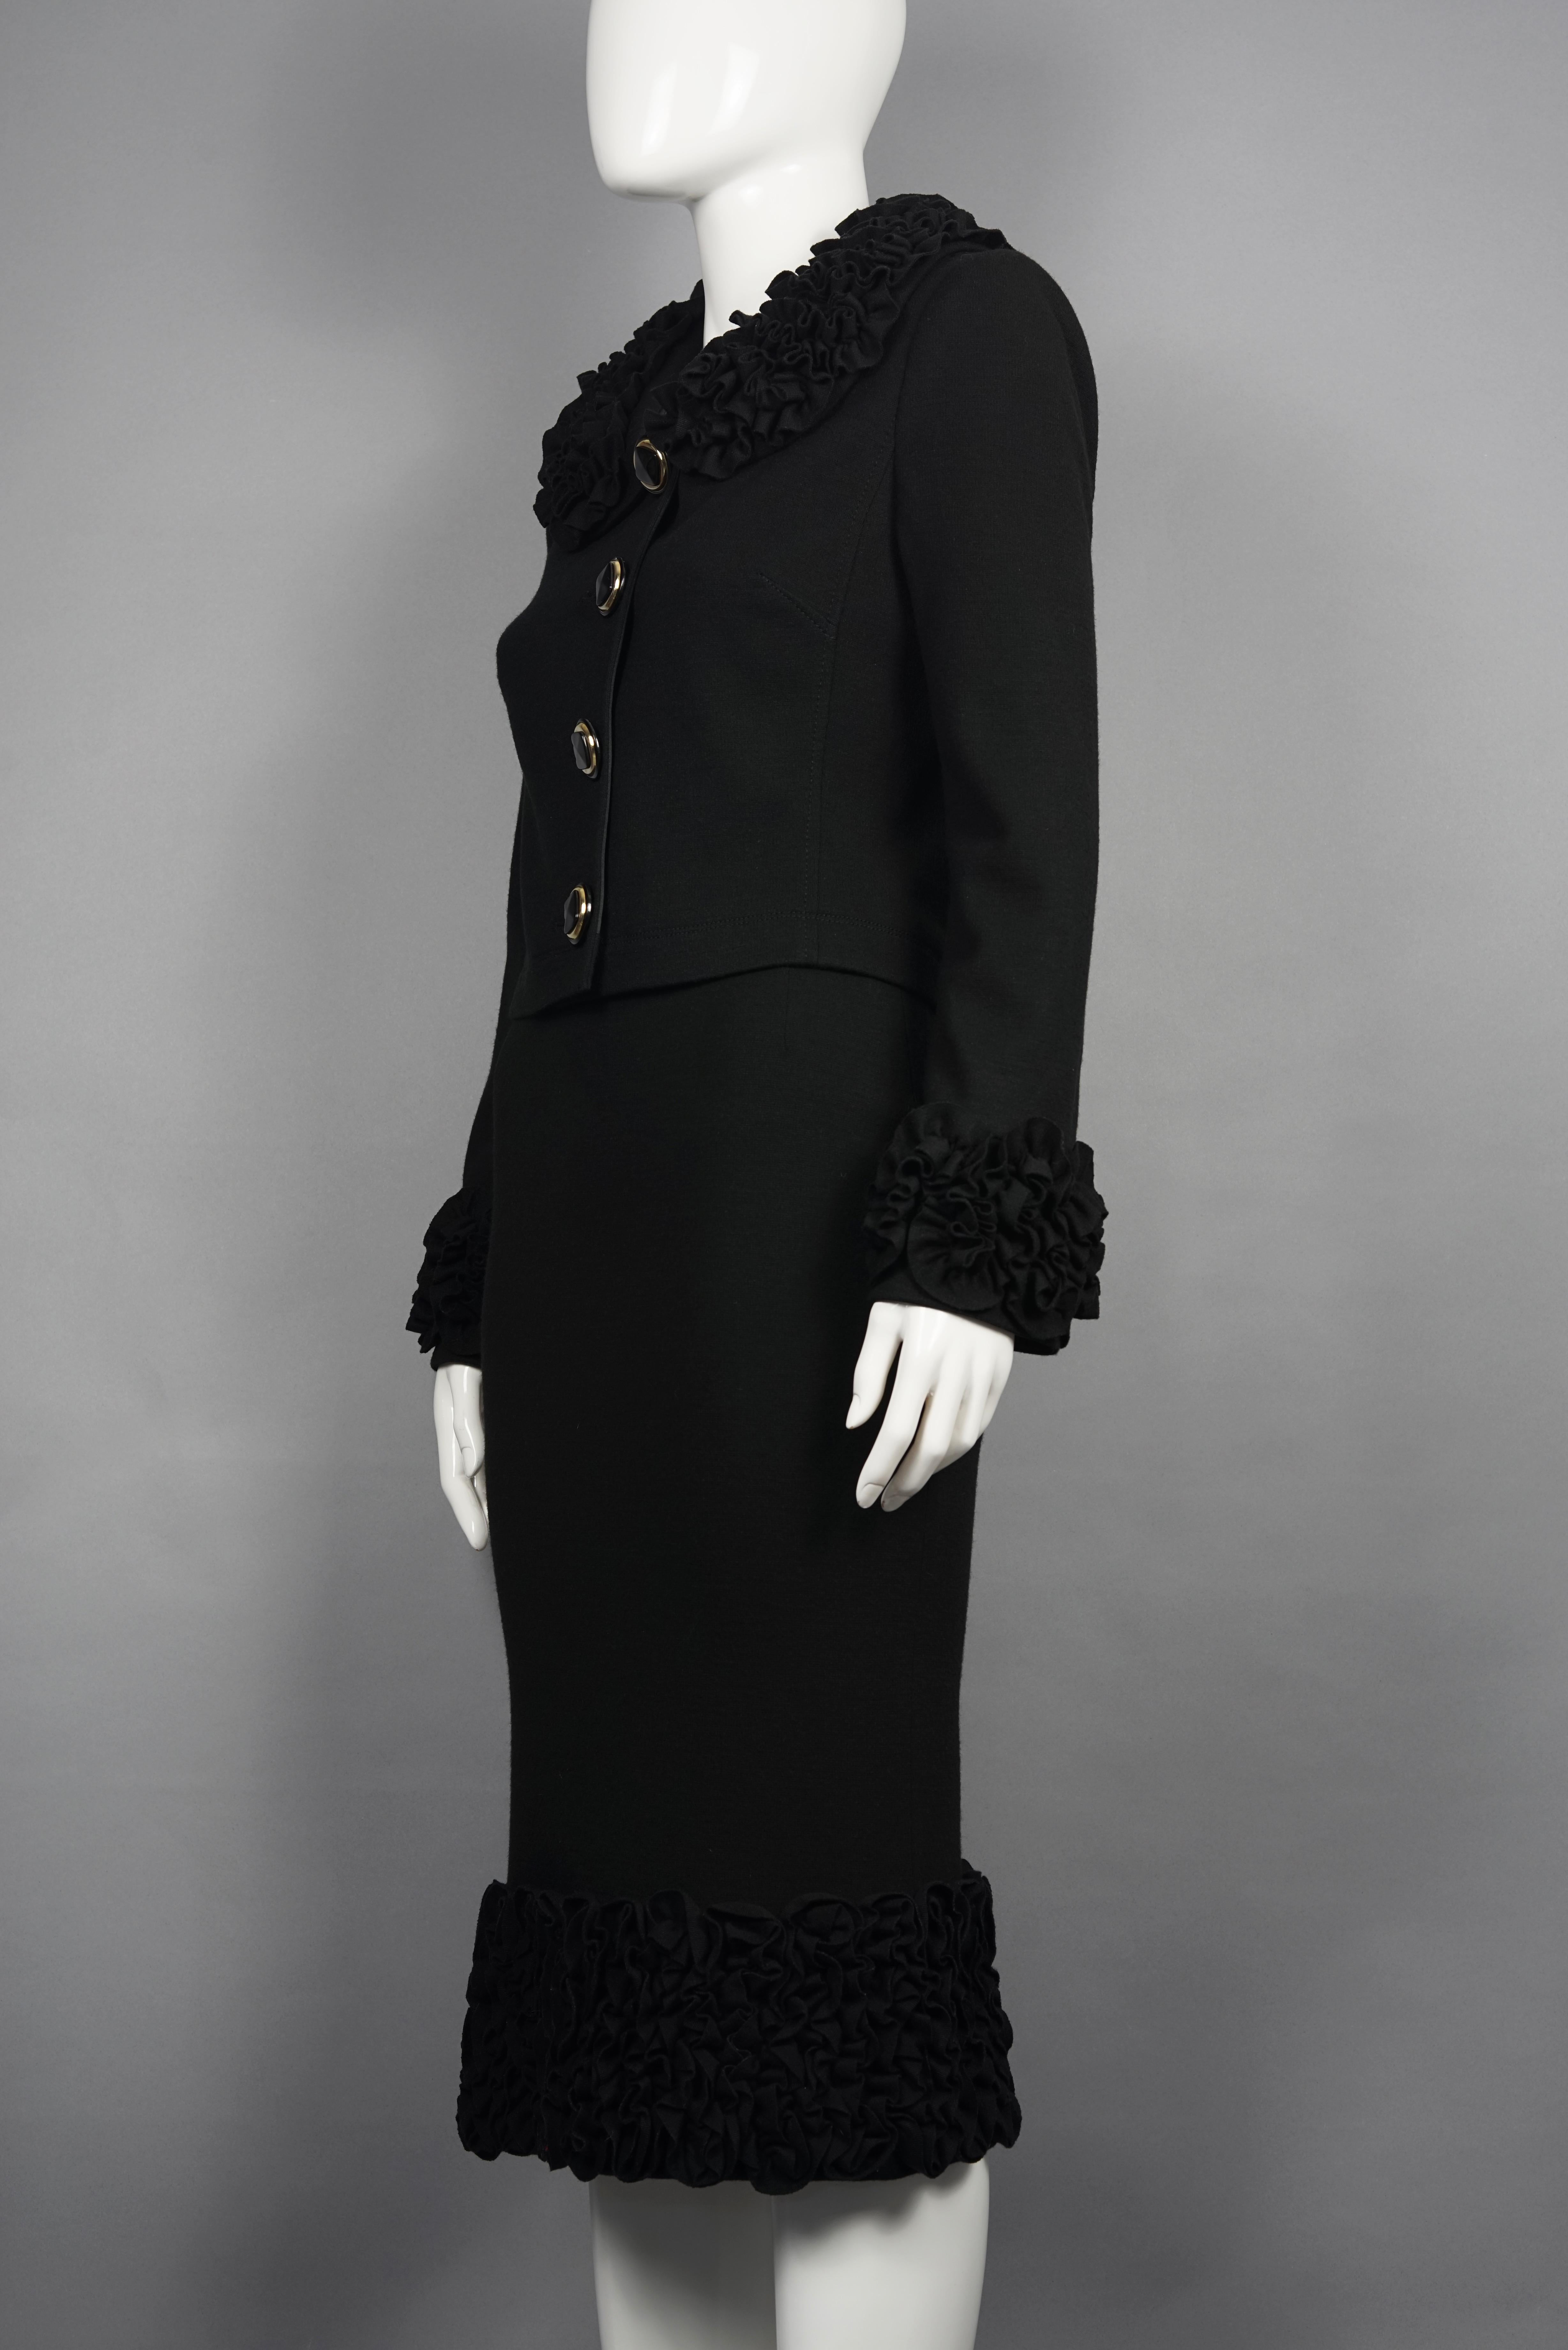 Vintage DOLCE & GABBANA Ruffles Jacket Skirt Suit Ensemble

Measurements taken laid flat, please double bust, waist and hips:
JACKET
Shoulder: 14.96 inches (38 cm)
Sleeves: 23.62 inches (60 cm)
Bust: 18.11 inches (46 cm)
Waist: 15.35 inches (39